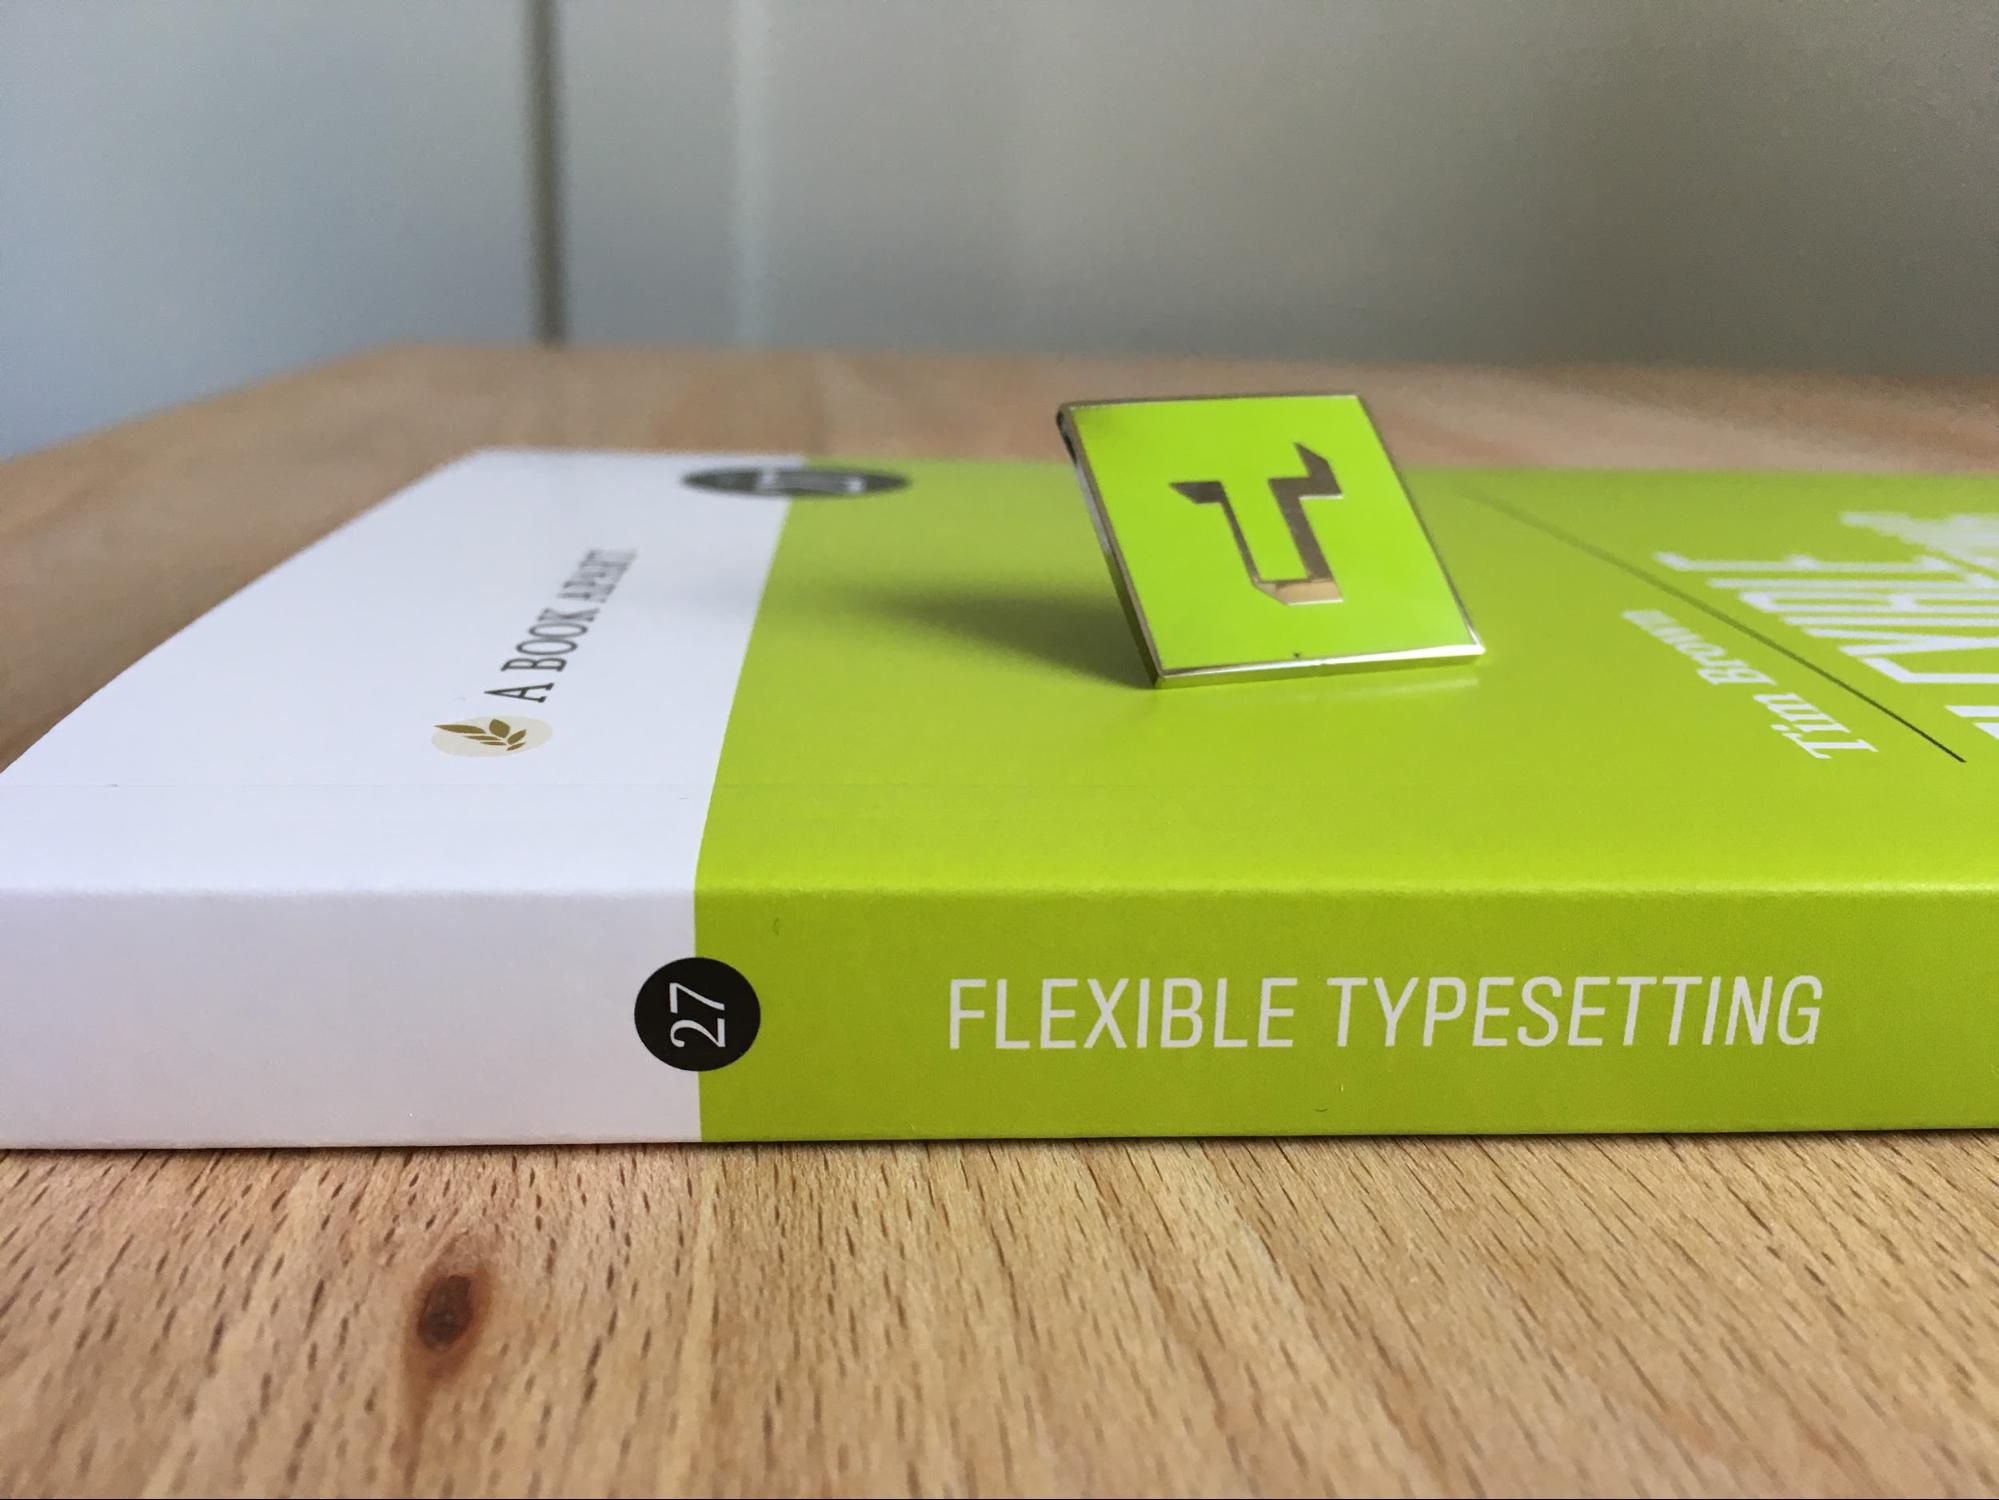 Flexible Typesetting book with Typekit pin on top